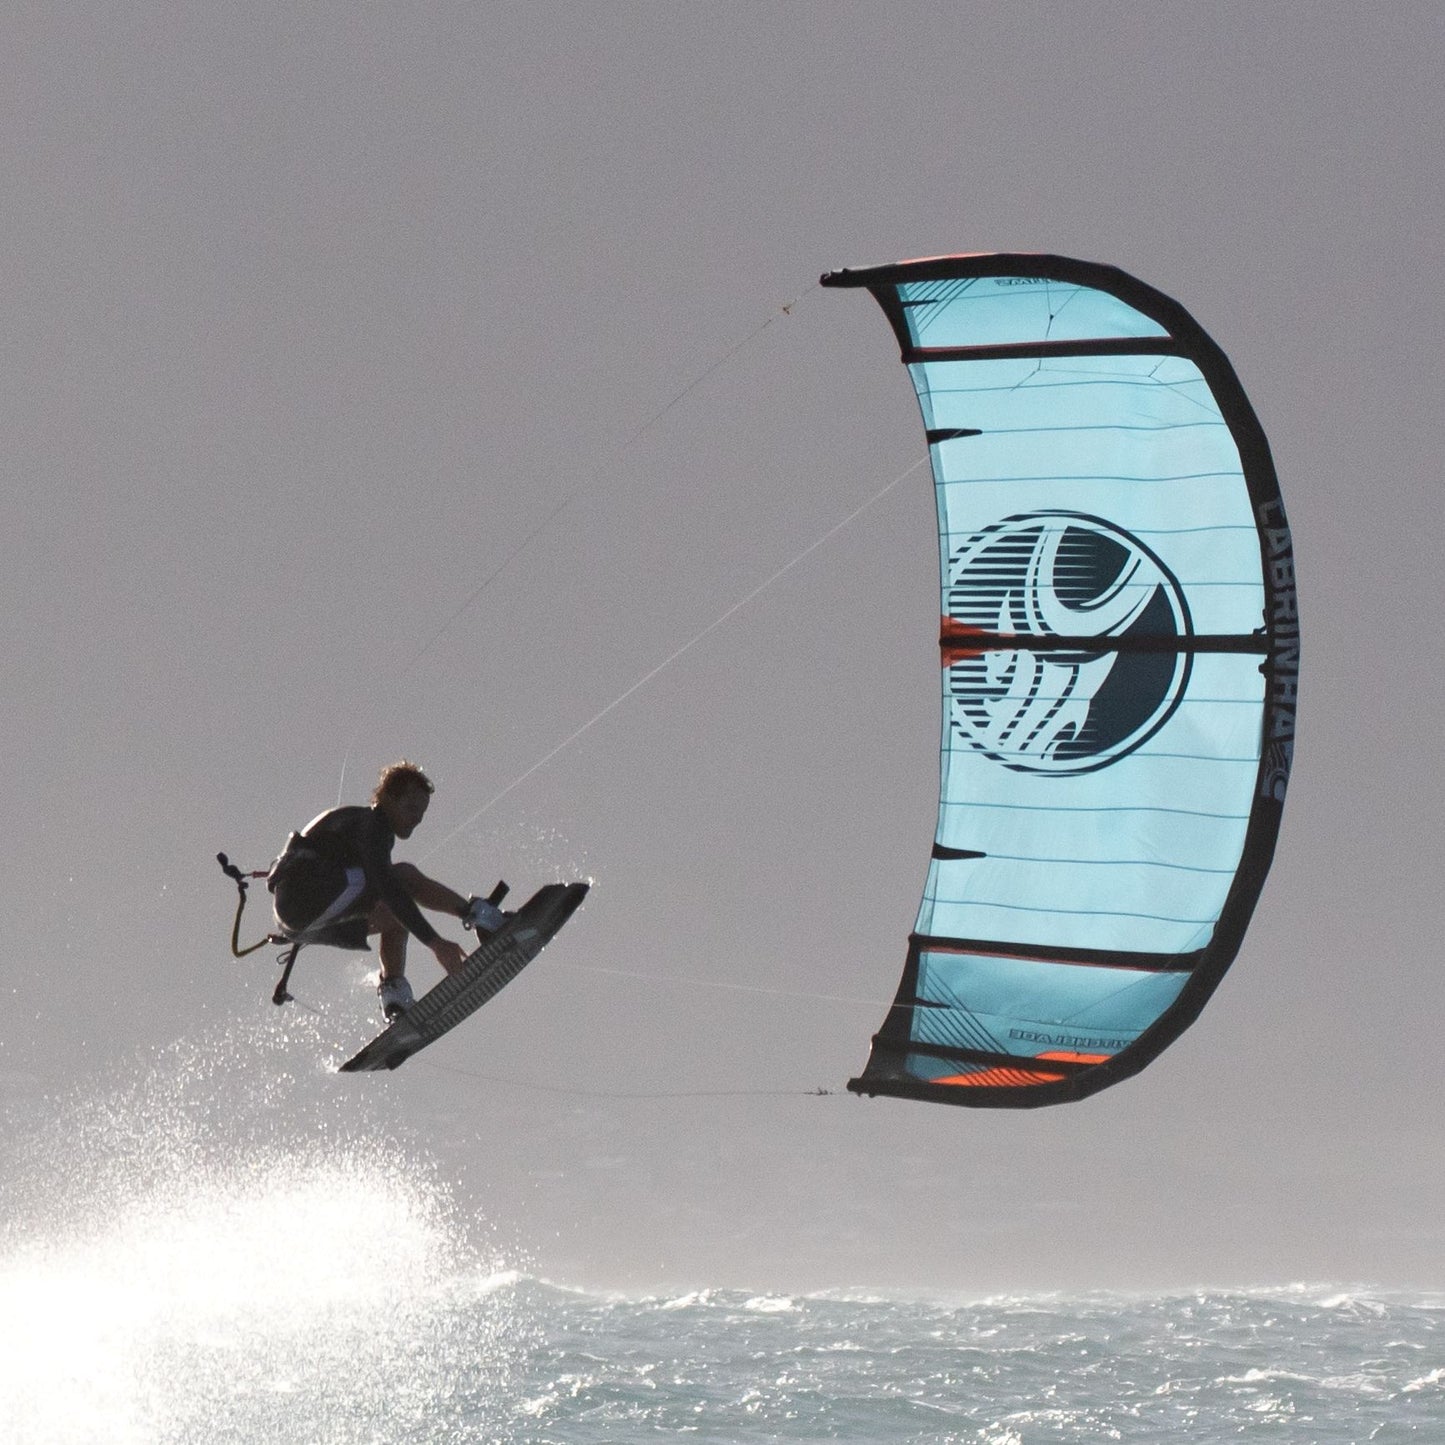 2020 Cabrinha Switchblade Performance Freeride / Big Air Kite